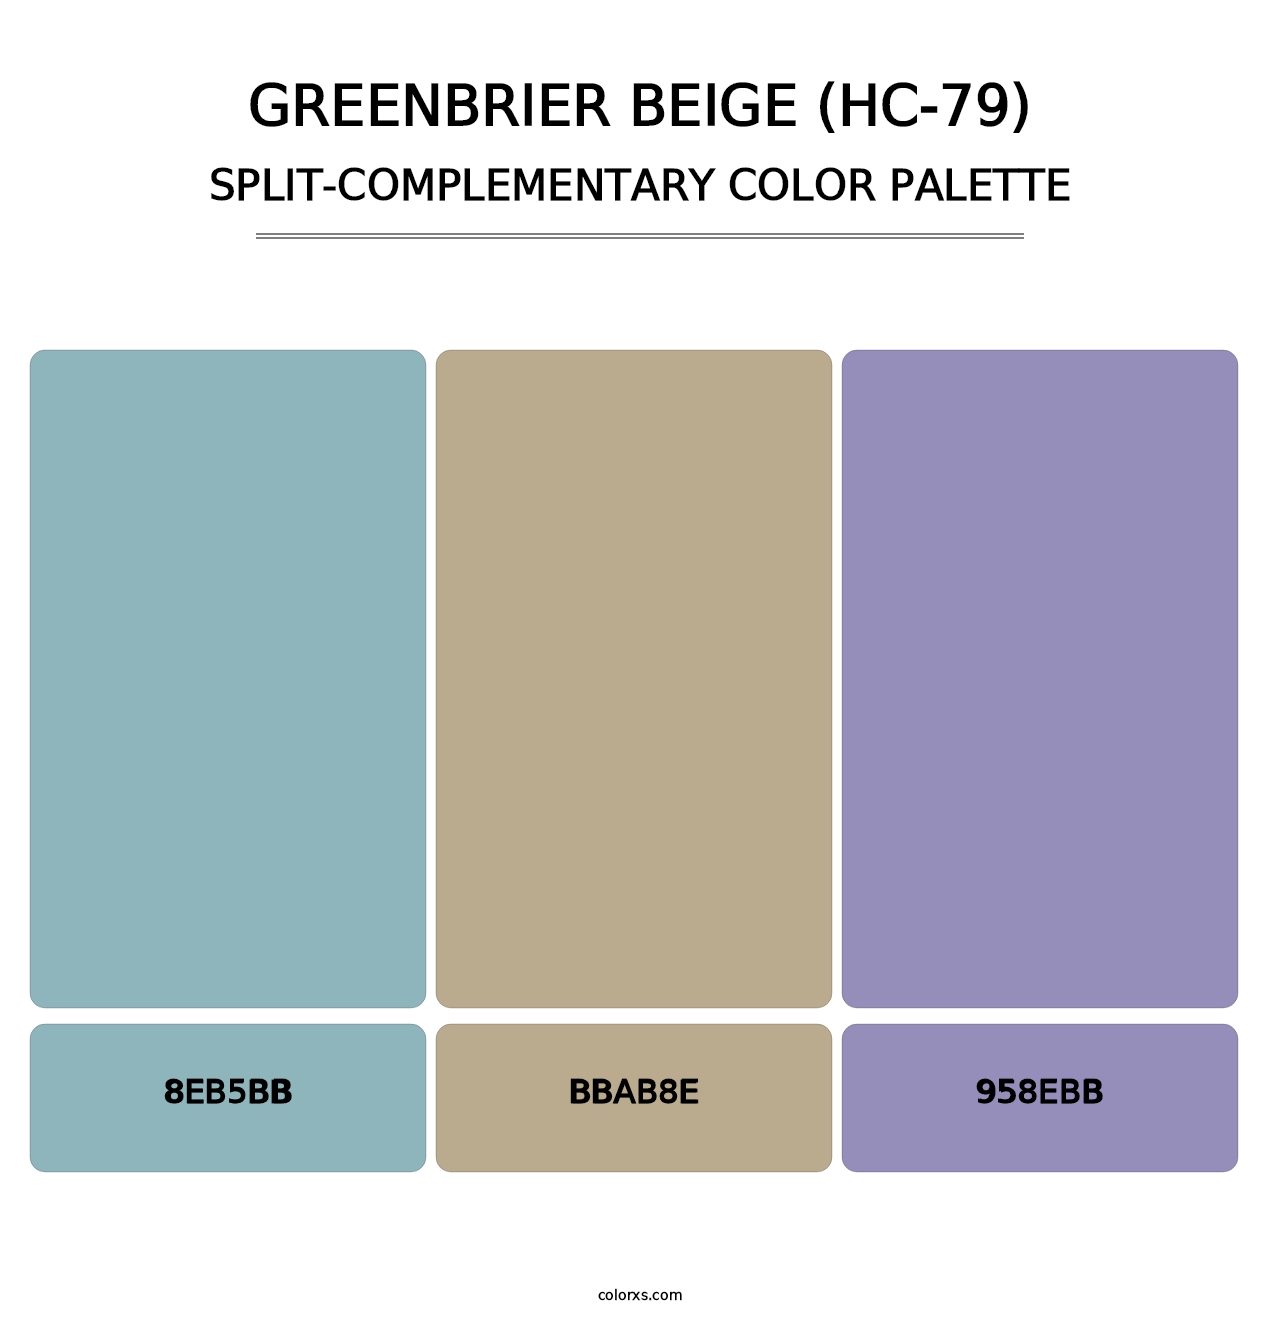 Greenbrier Beige (HC-79) - Split-Complementary Color Palette